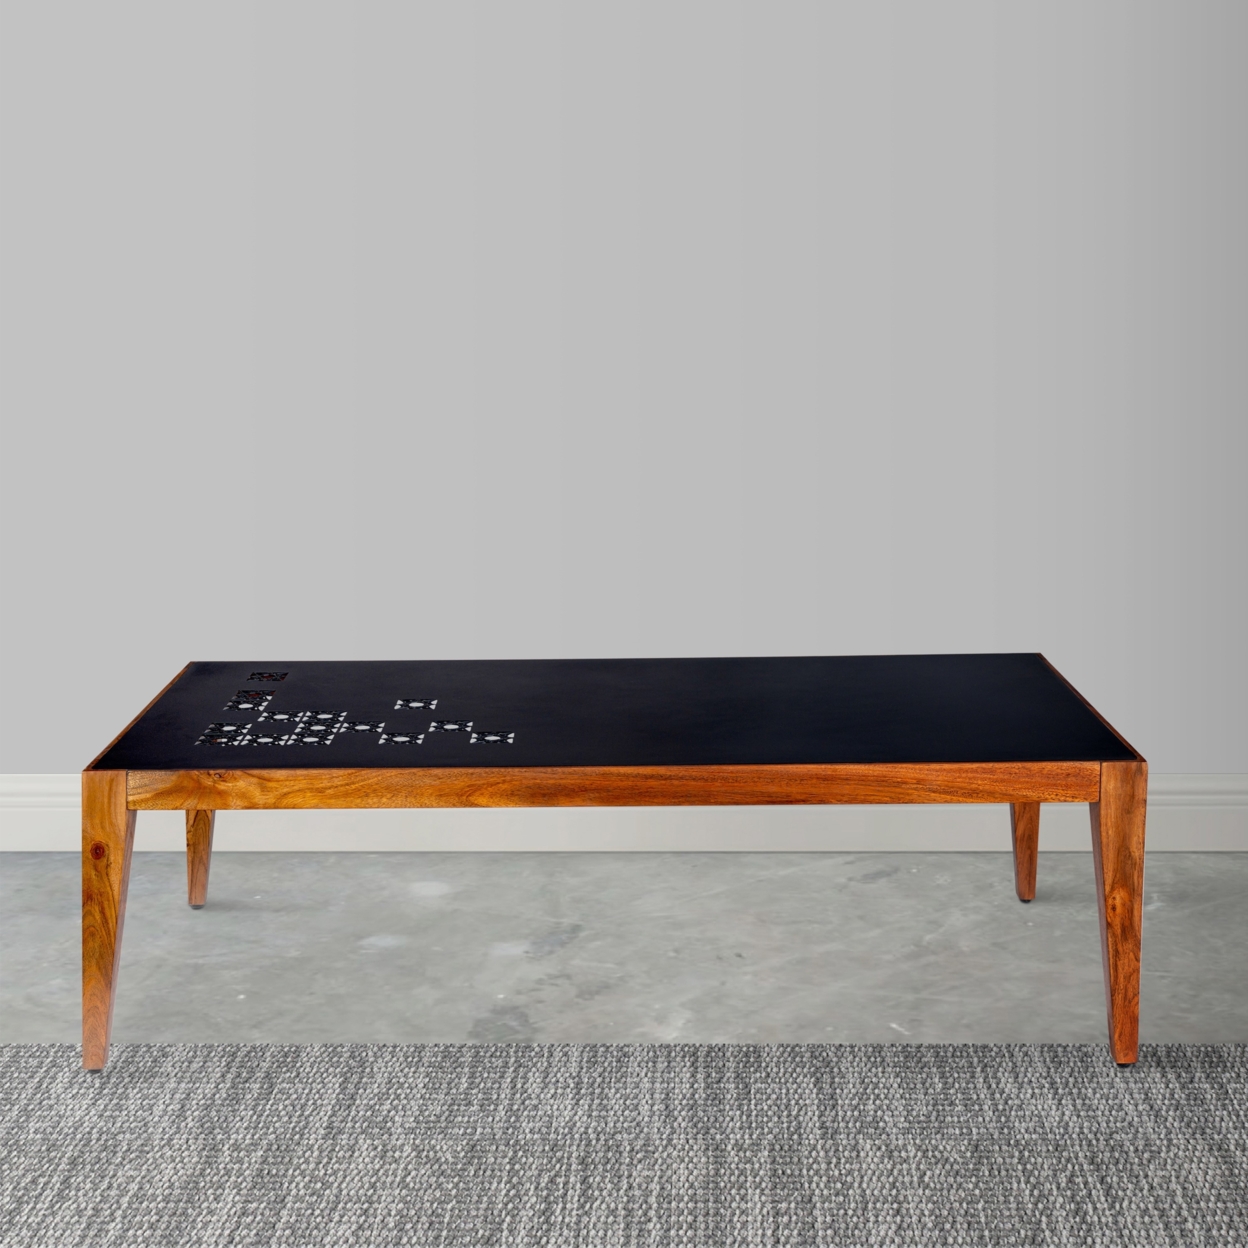 Alba 47 Inch Rectangular Metal Top Coffee Table With Laser Cut Design, Black And Brown- Saltoro Sherpi